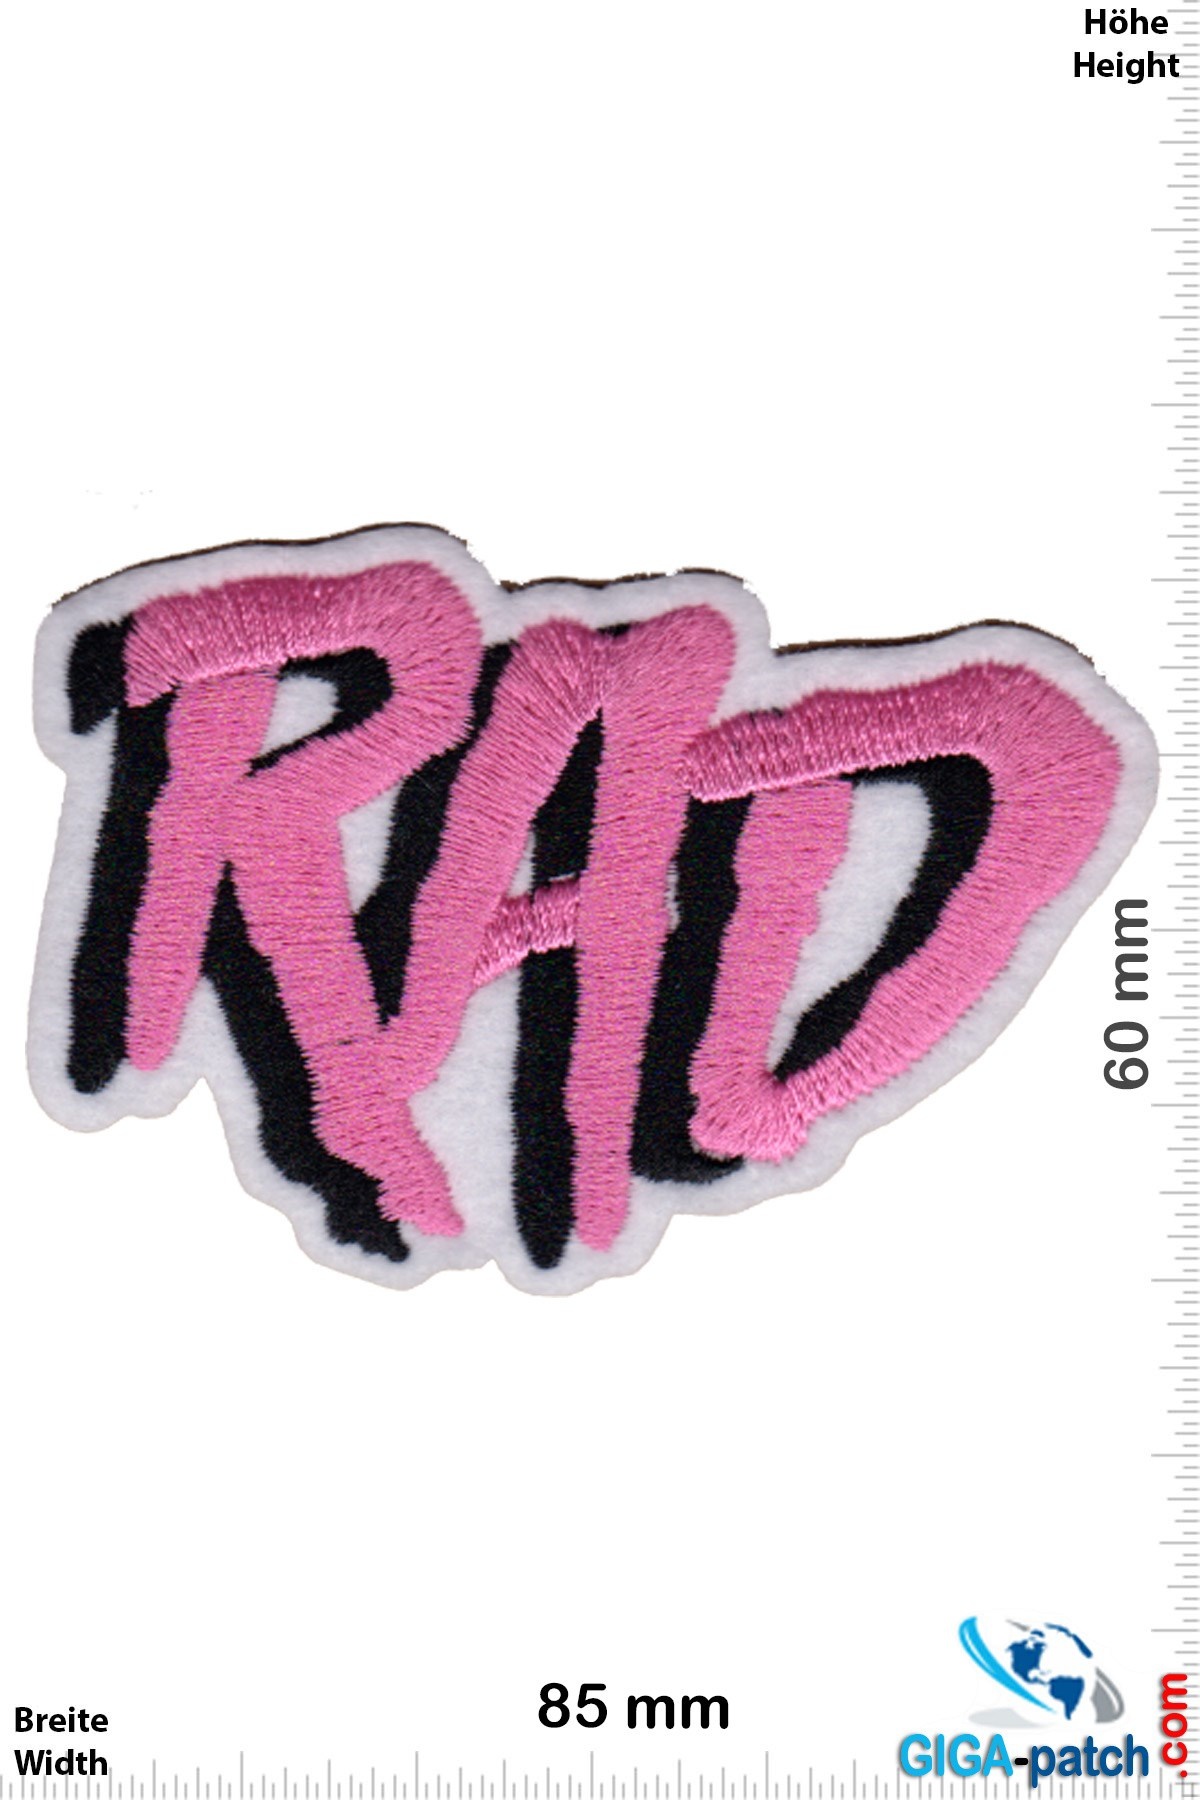 Fun RAD - Radical Cool